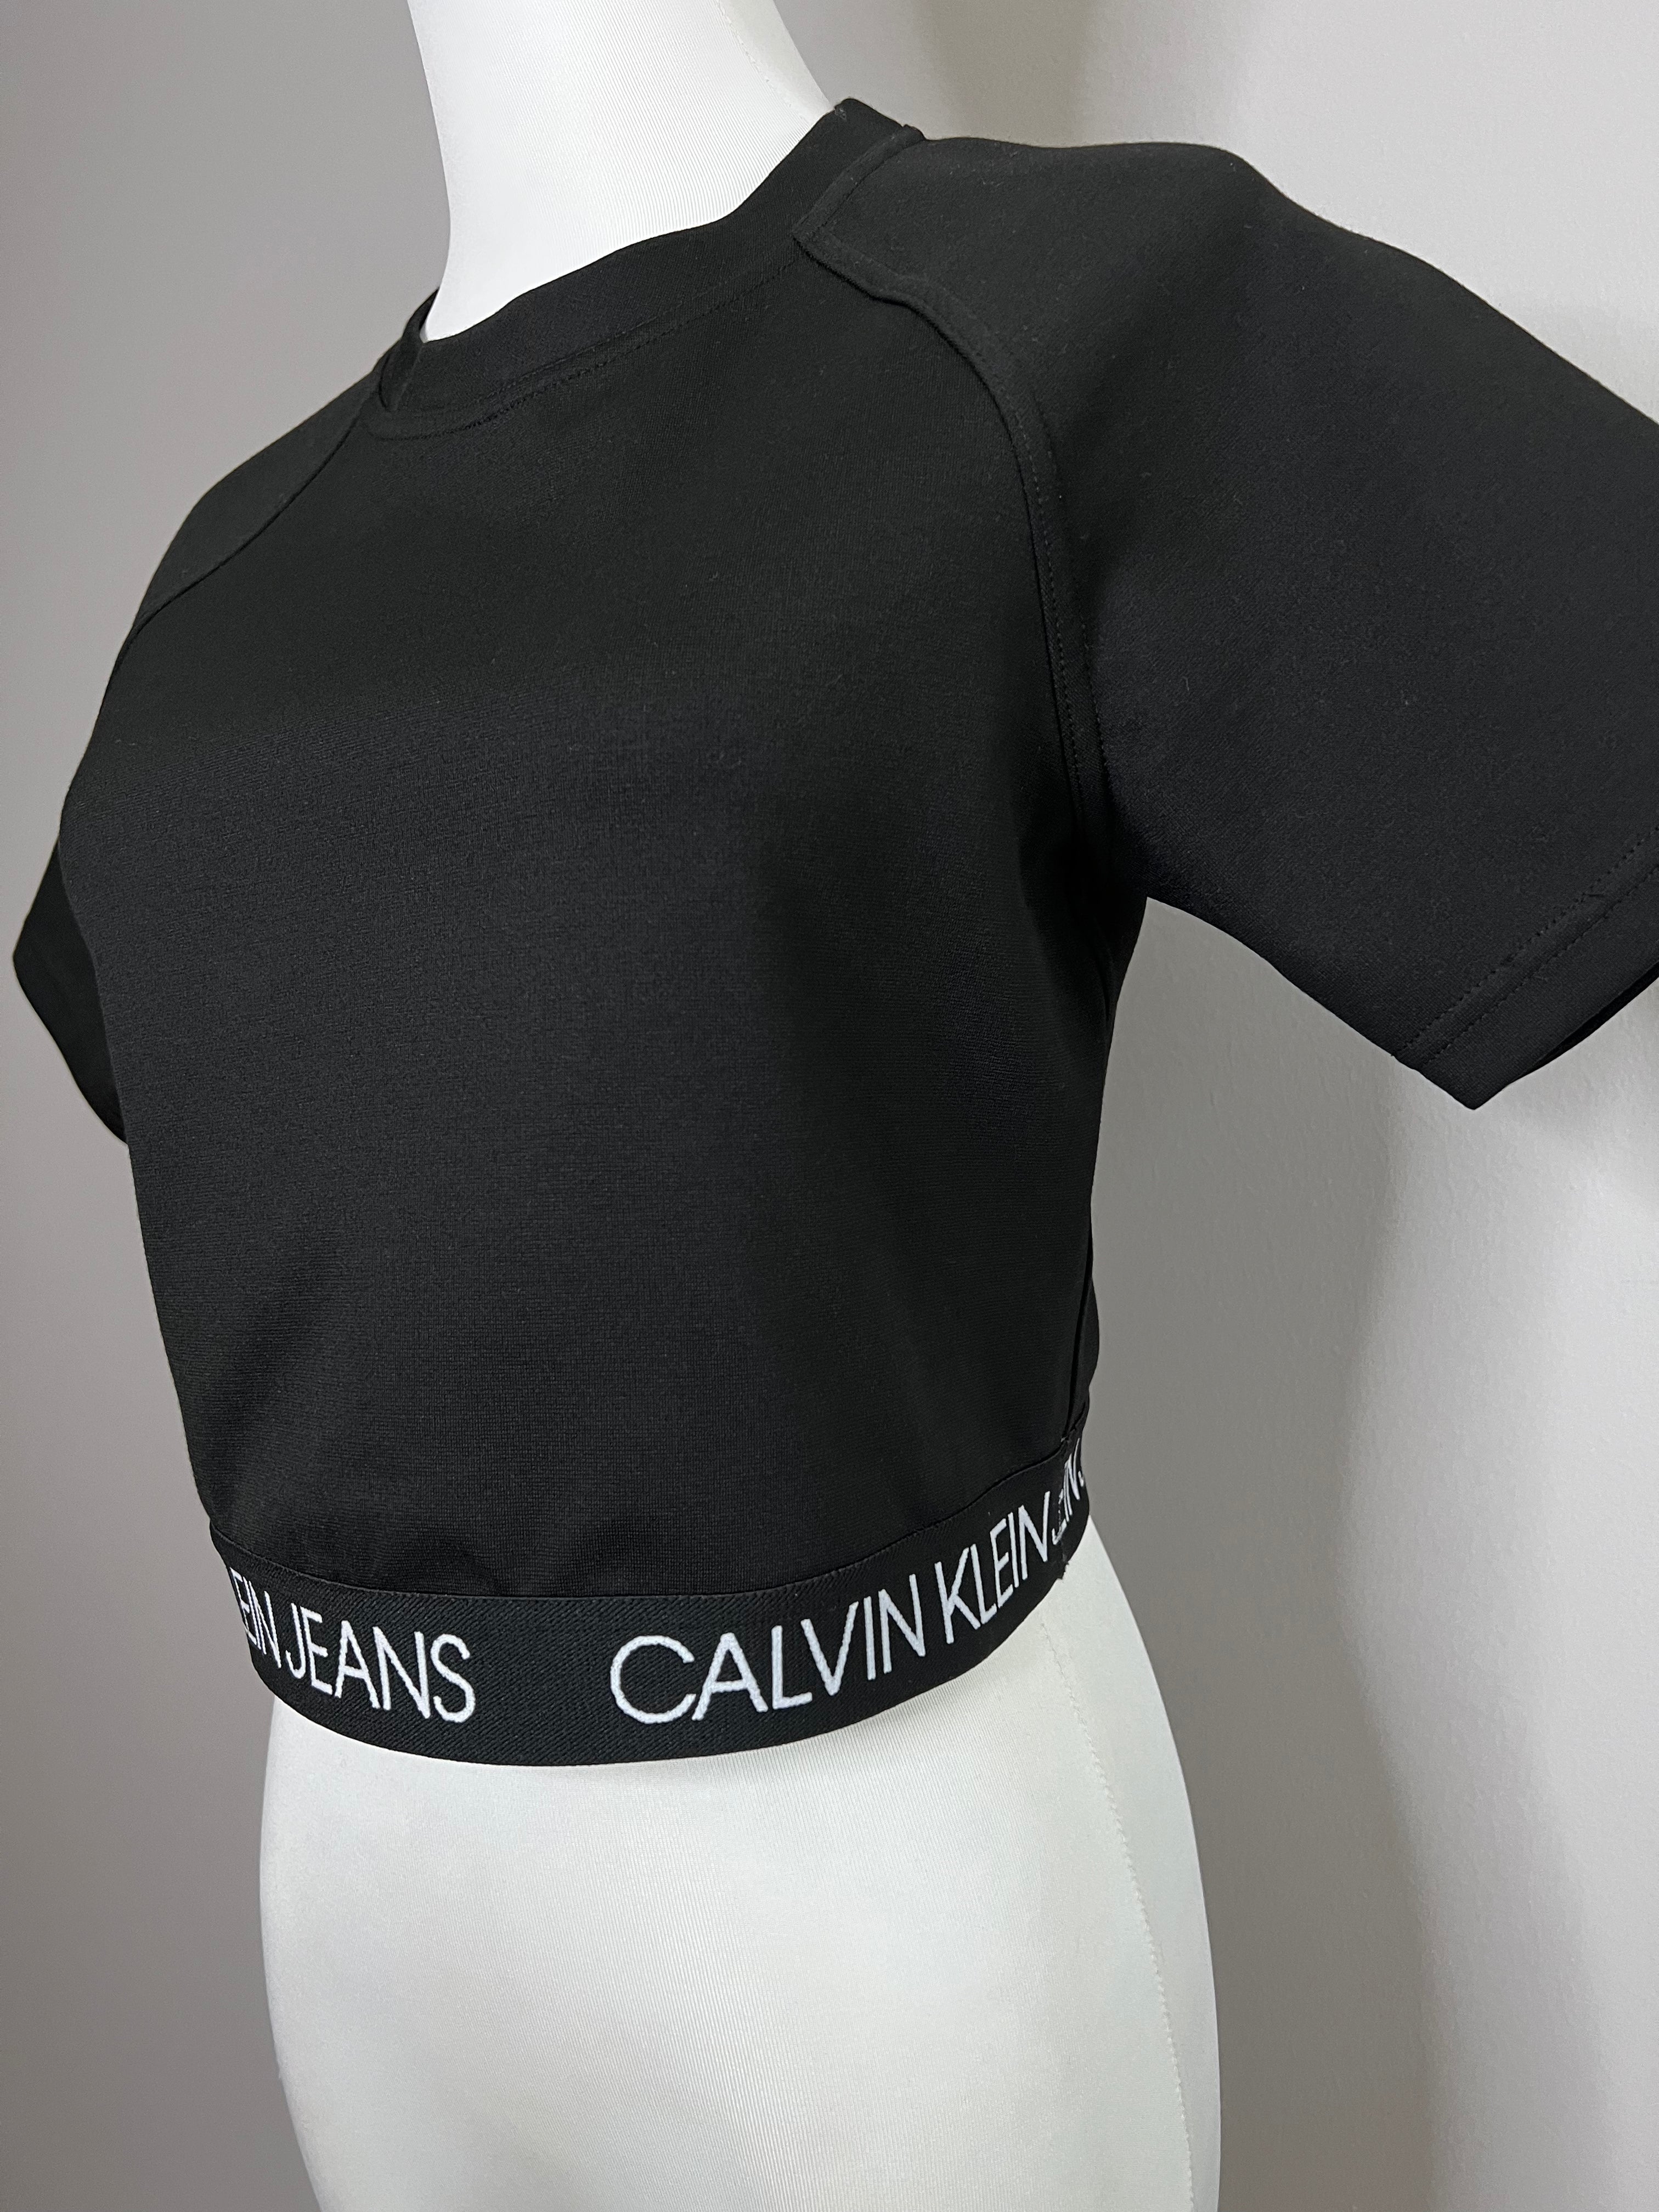 Slim cropped logo tape t-shirt in black - CALVIN KLEIN